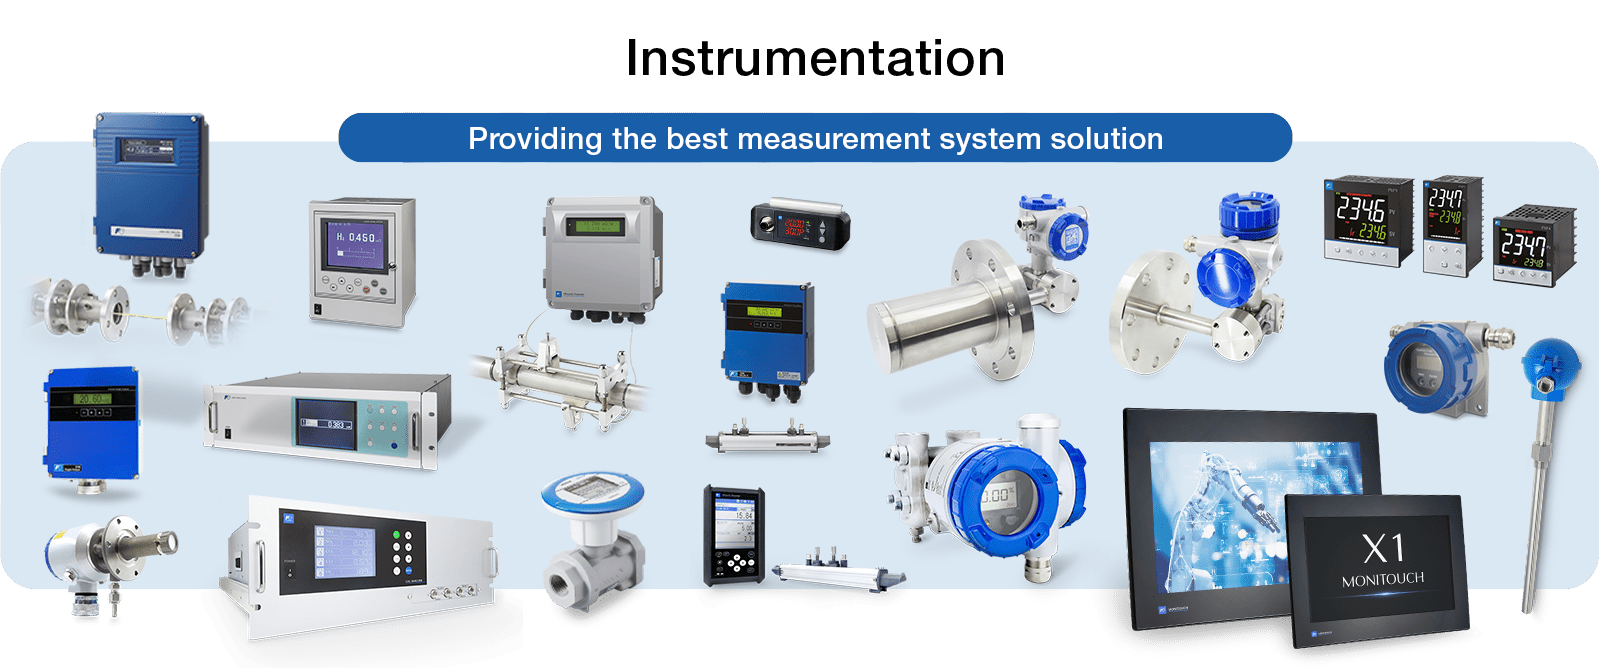 partner for measurement solutions en